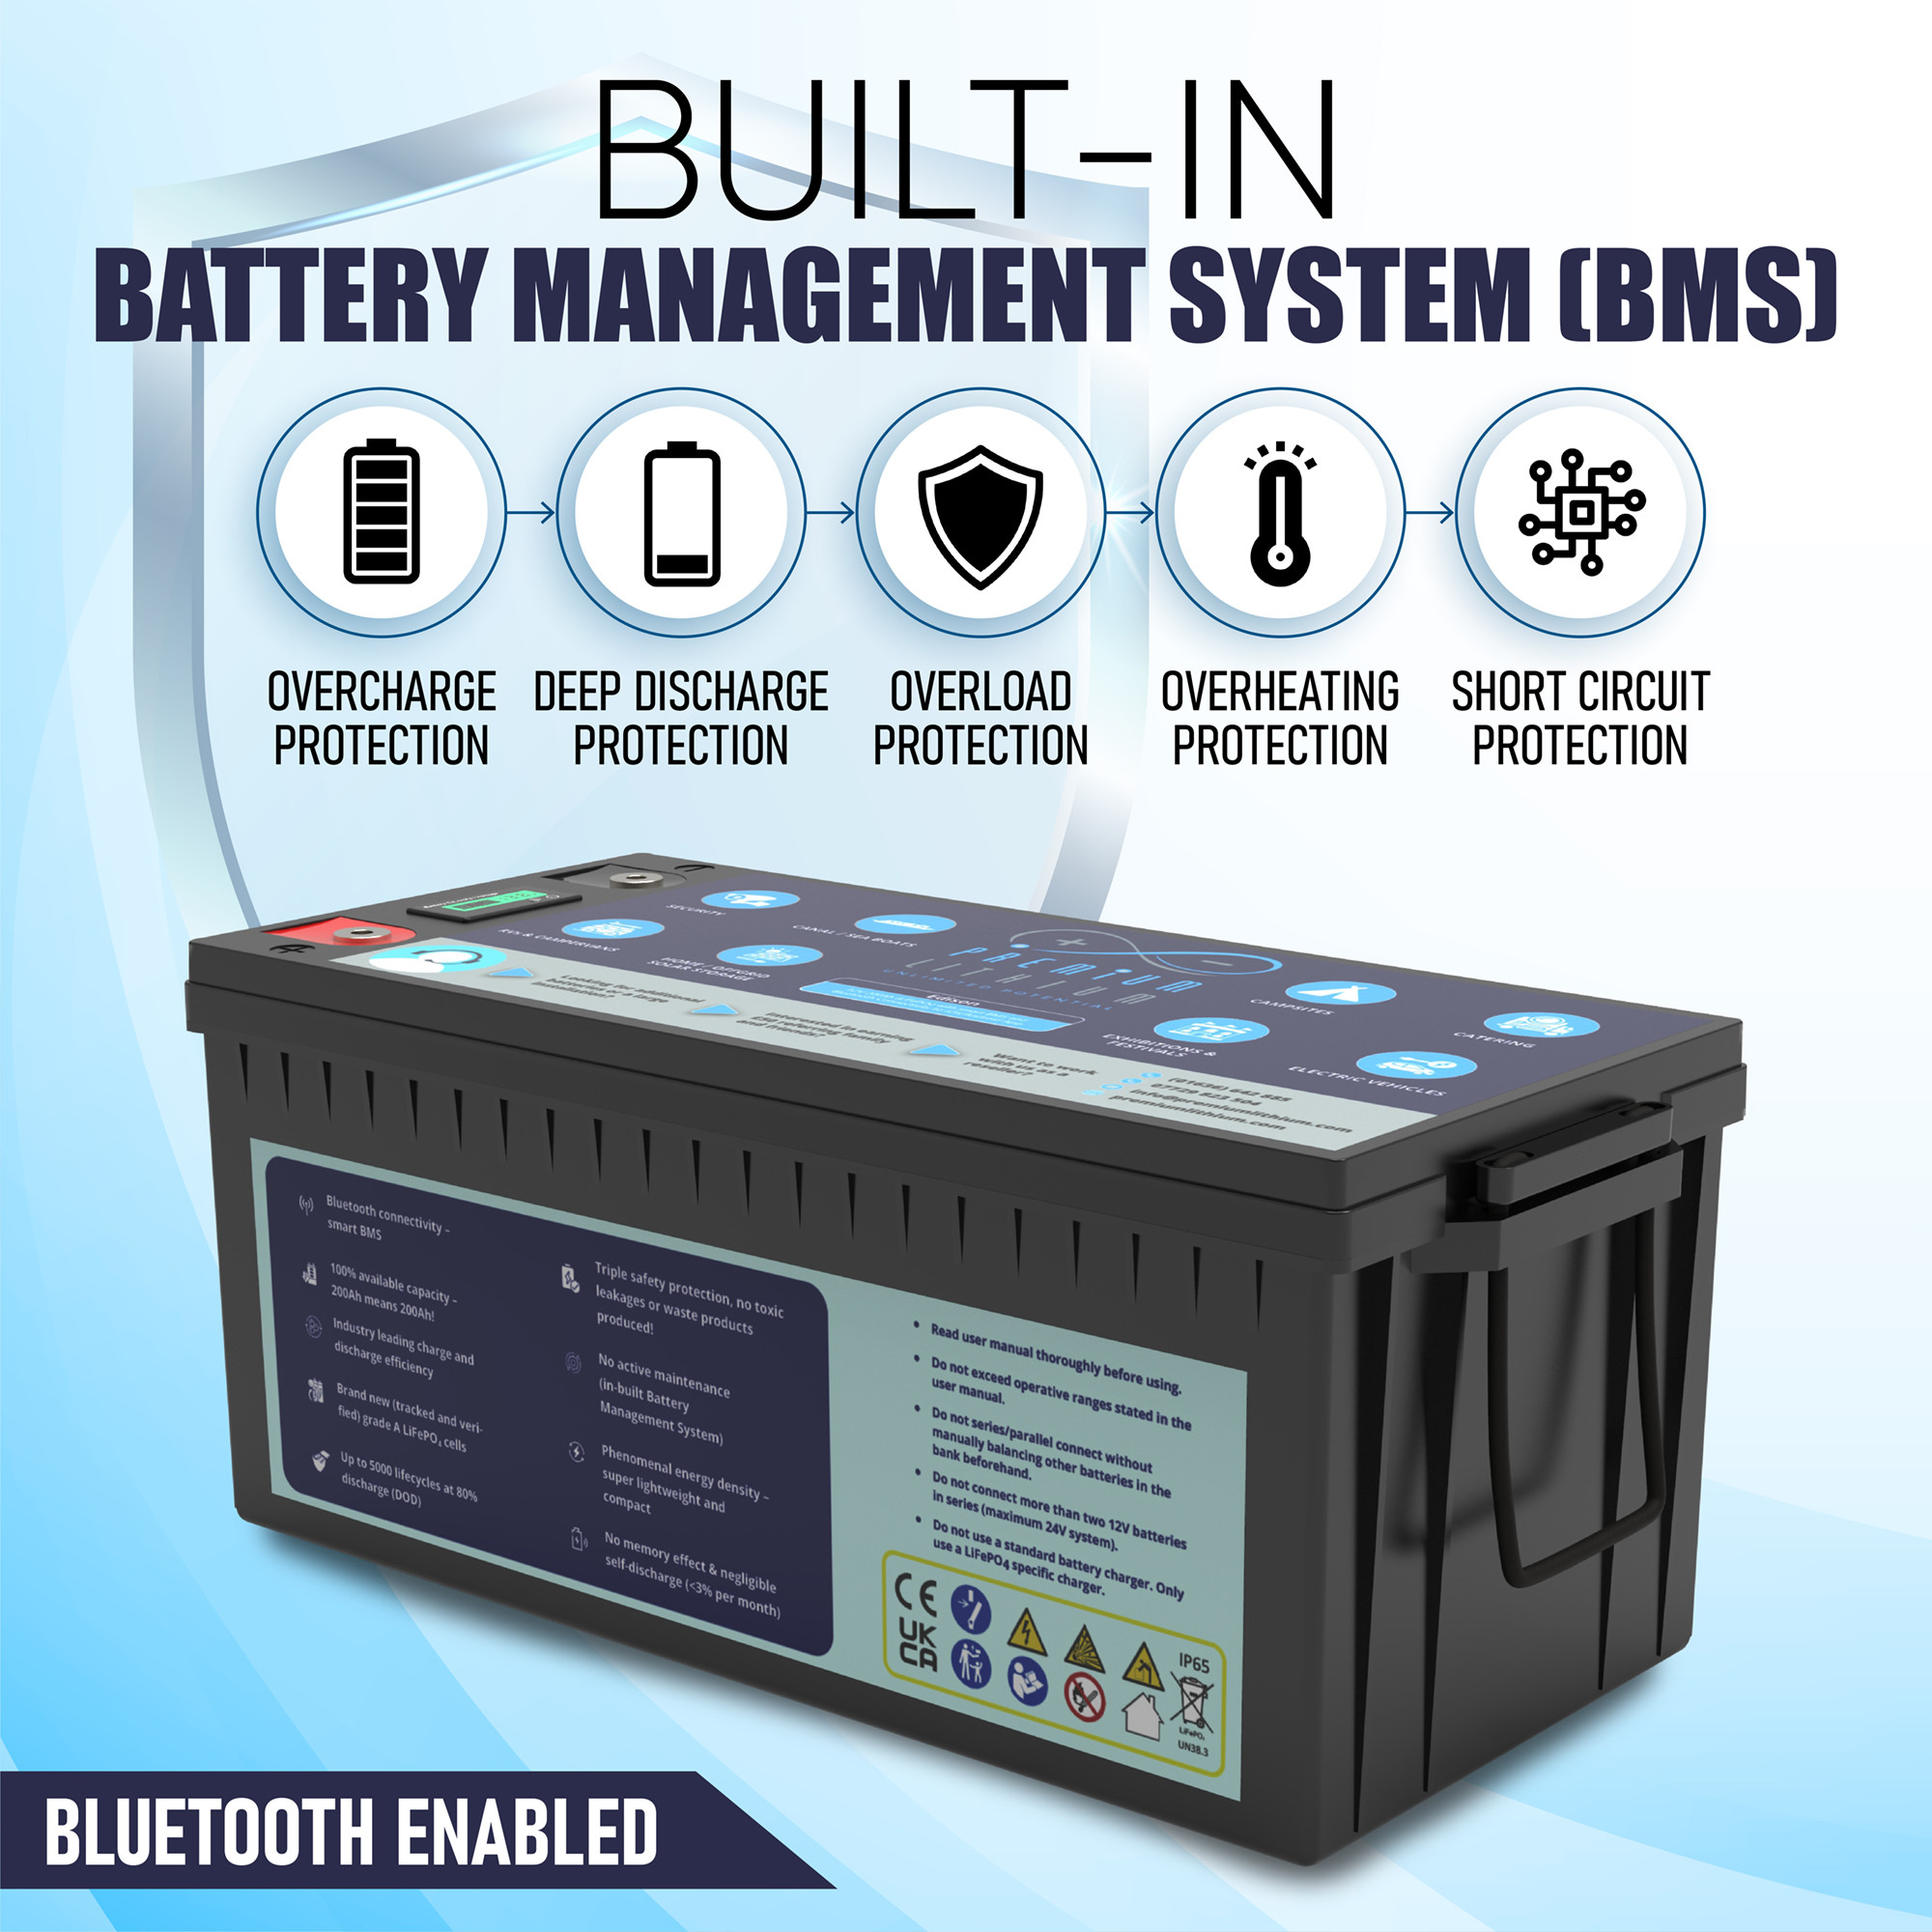 Lifepo4 battery pack. Lithium battery for vanlife